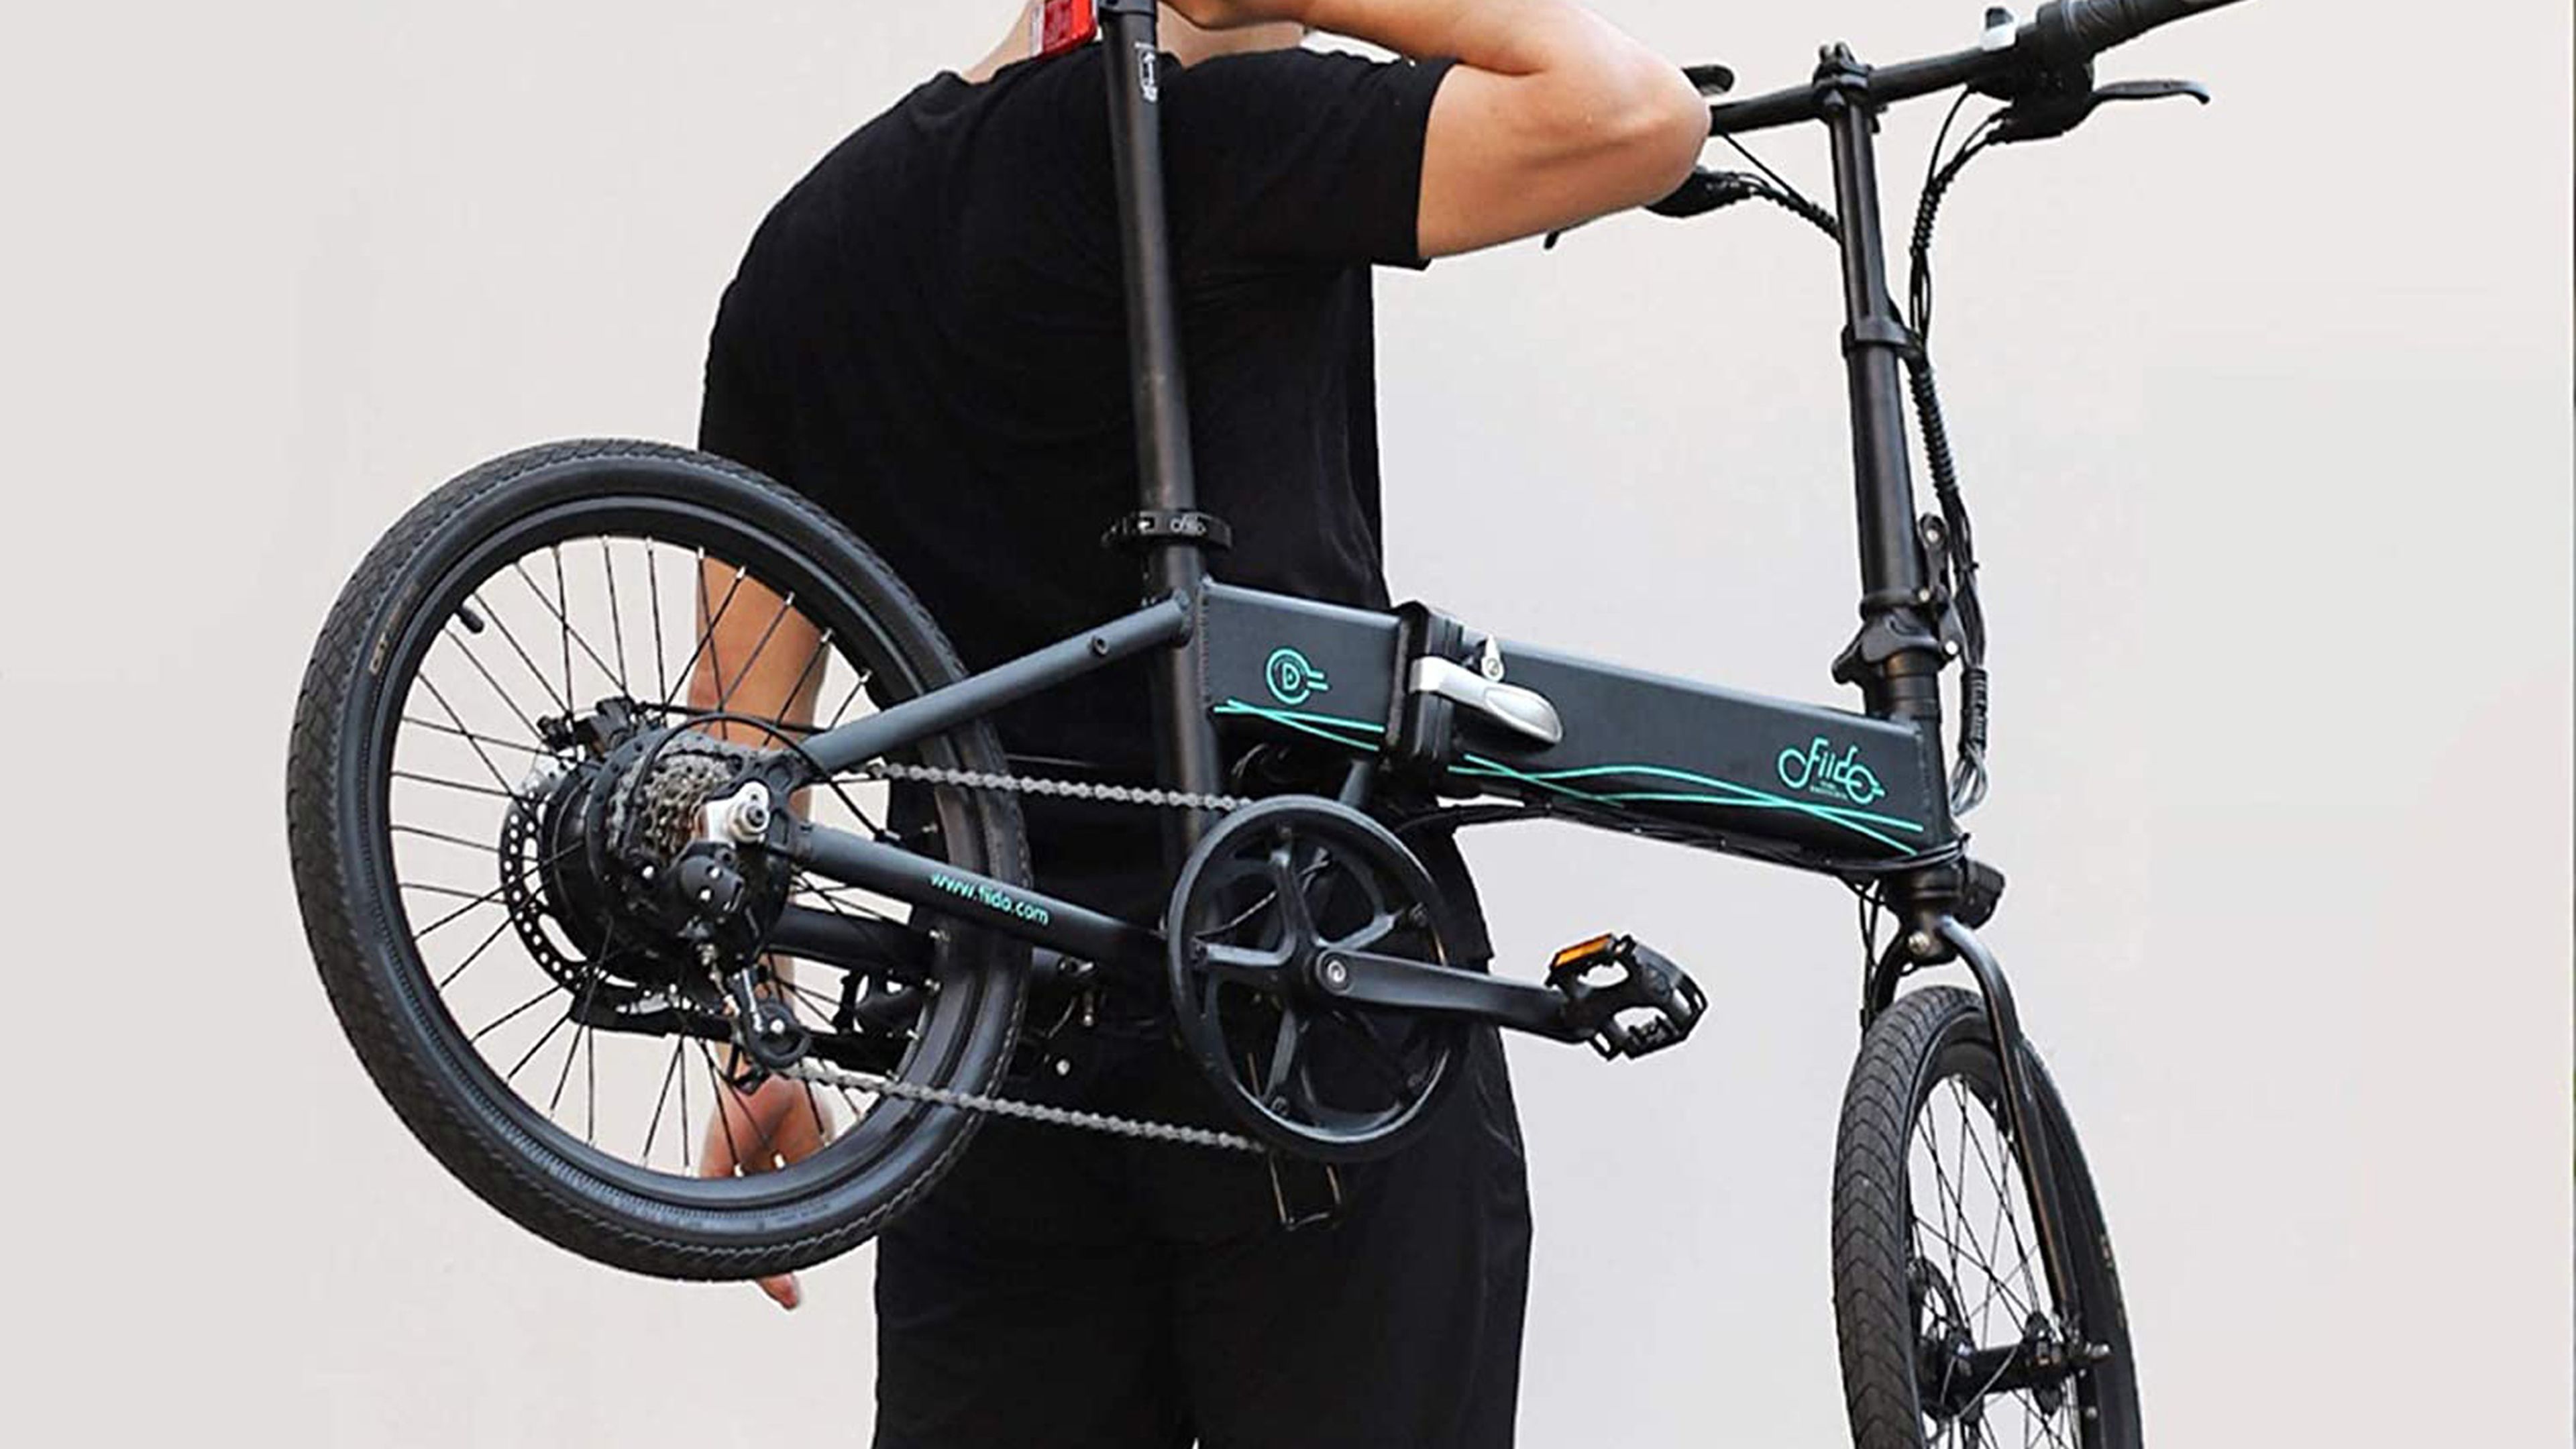 Las mejores ofertas en E-bicicleta plegable Frente bicicletas eléctricas